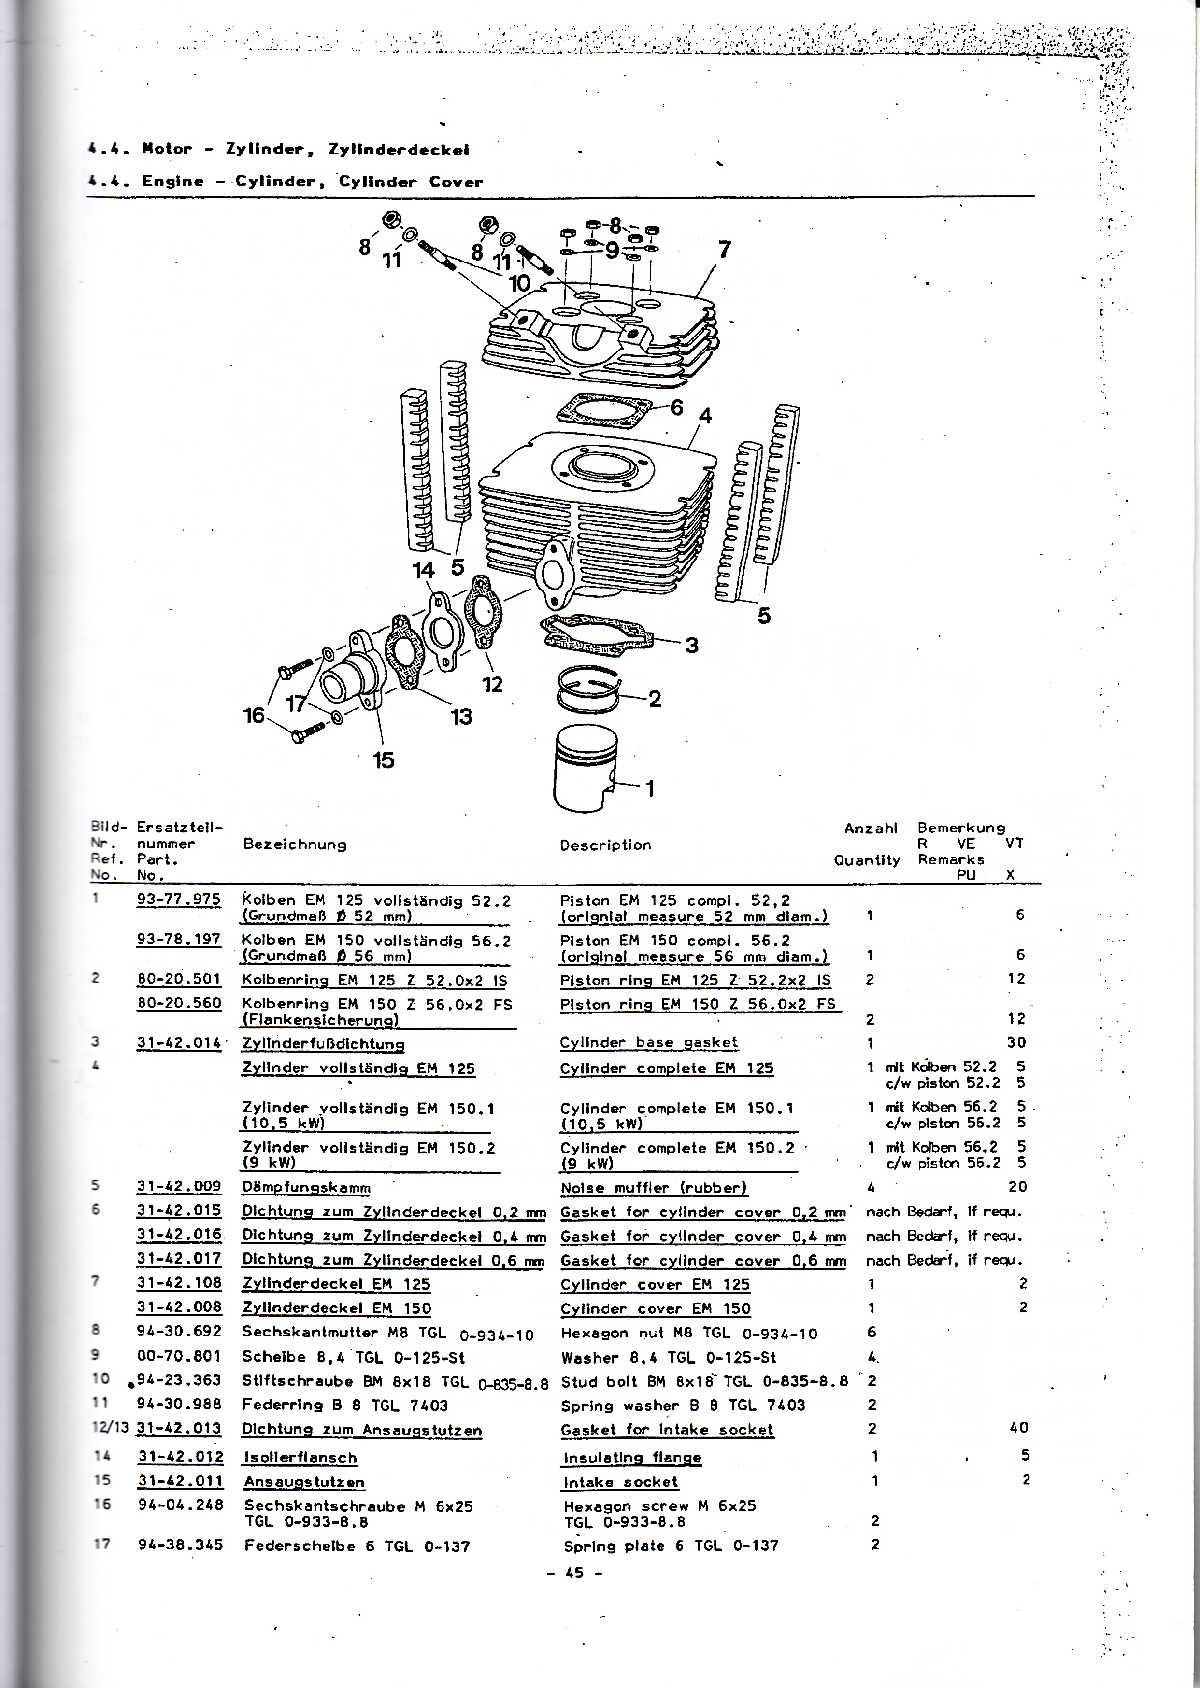 Katalog MZ 150 ETZ, MZ 125 ETZ - 4.4. Motor - Zylinder, Zylinderdeckel